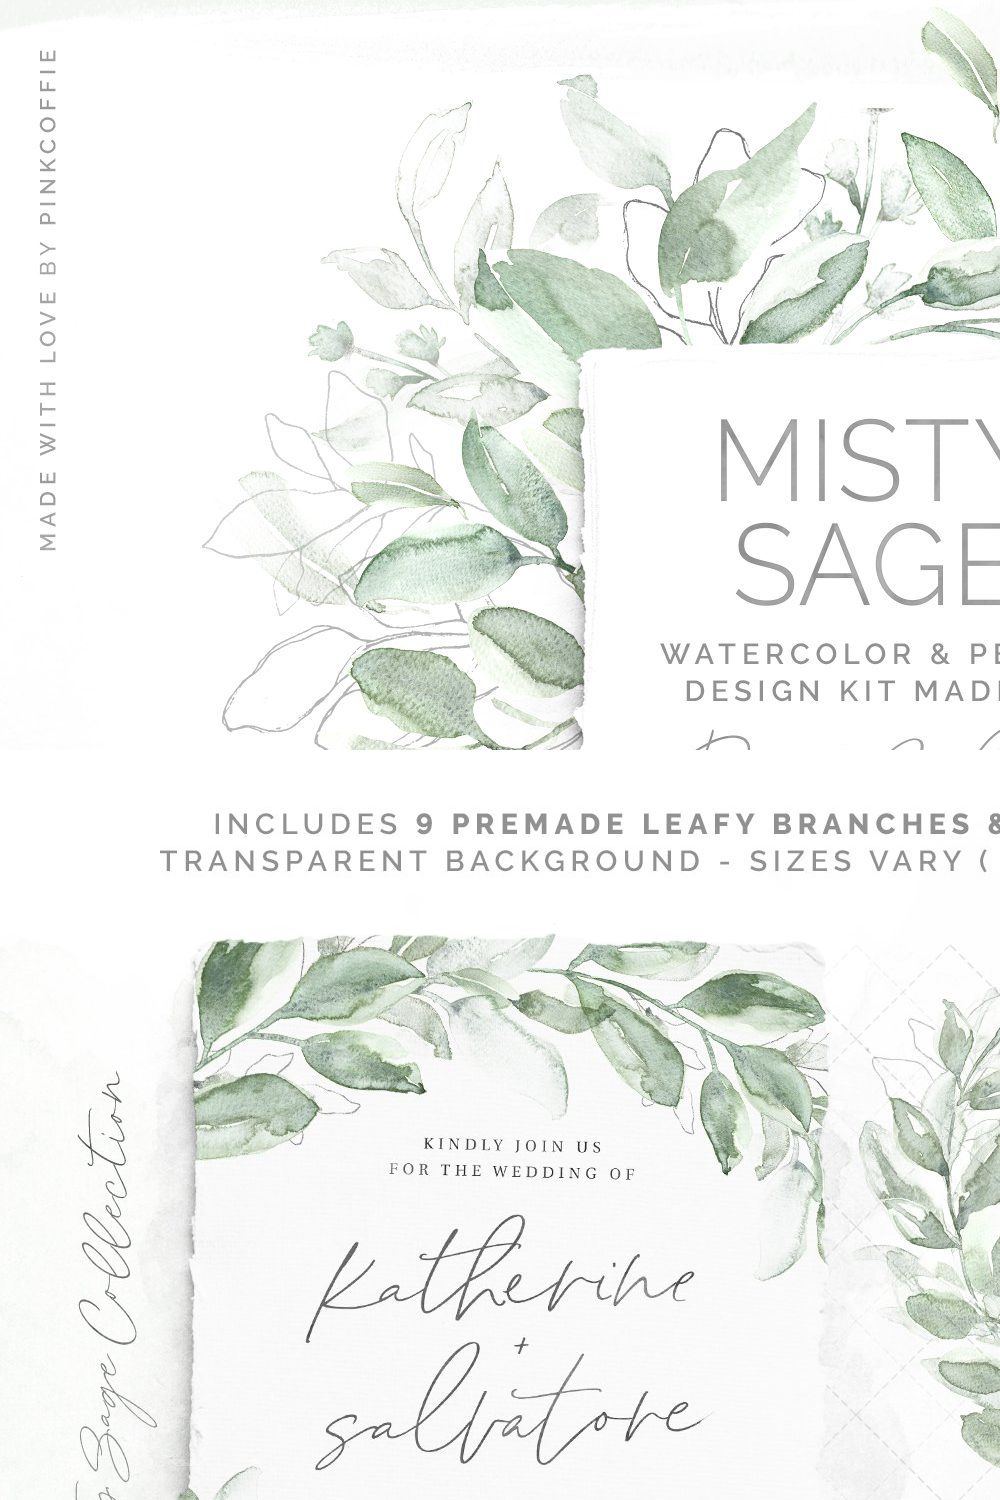 Misty Sage Watercolor & Pencil Kit pinterest preview image.